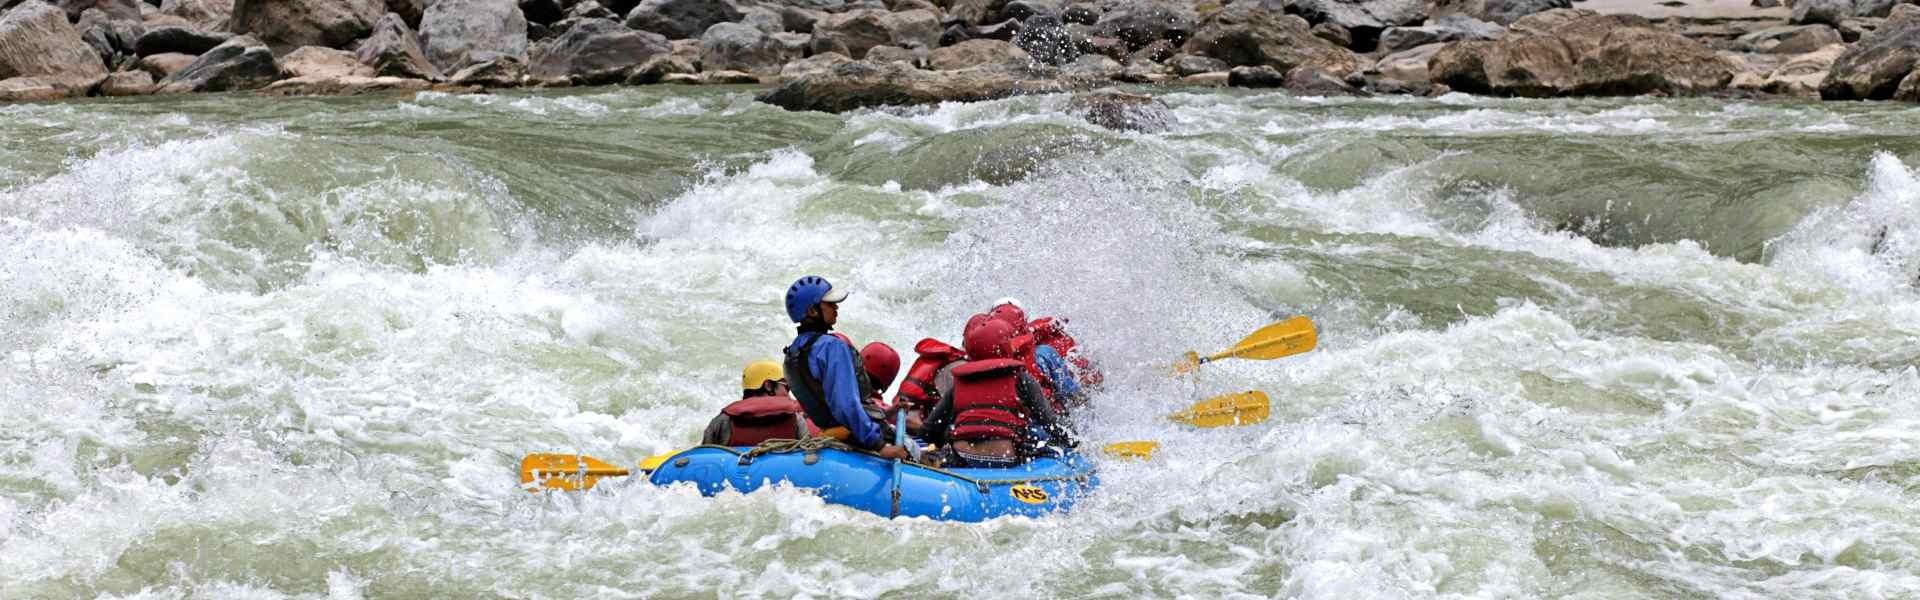 Rafting in Nepal, Trekking Planner Inc. white water rafting, river fun